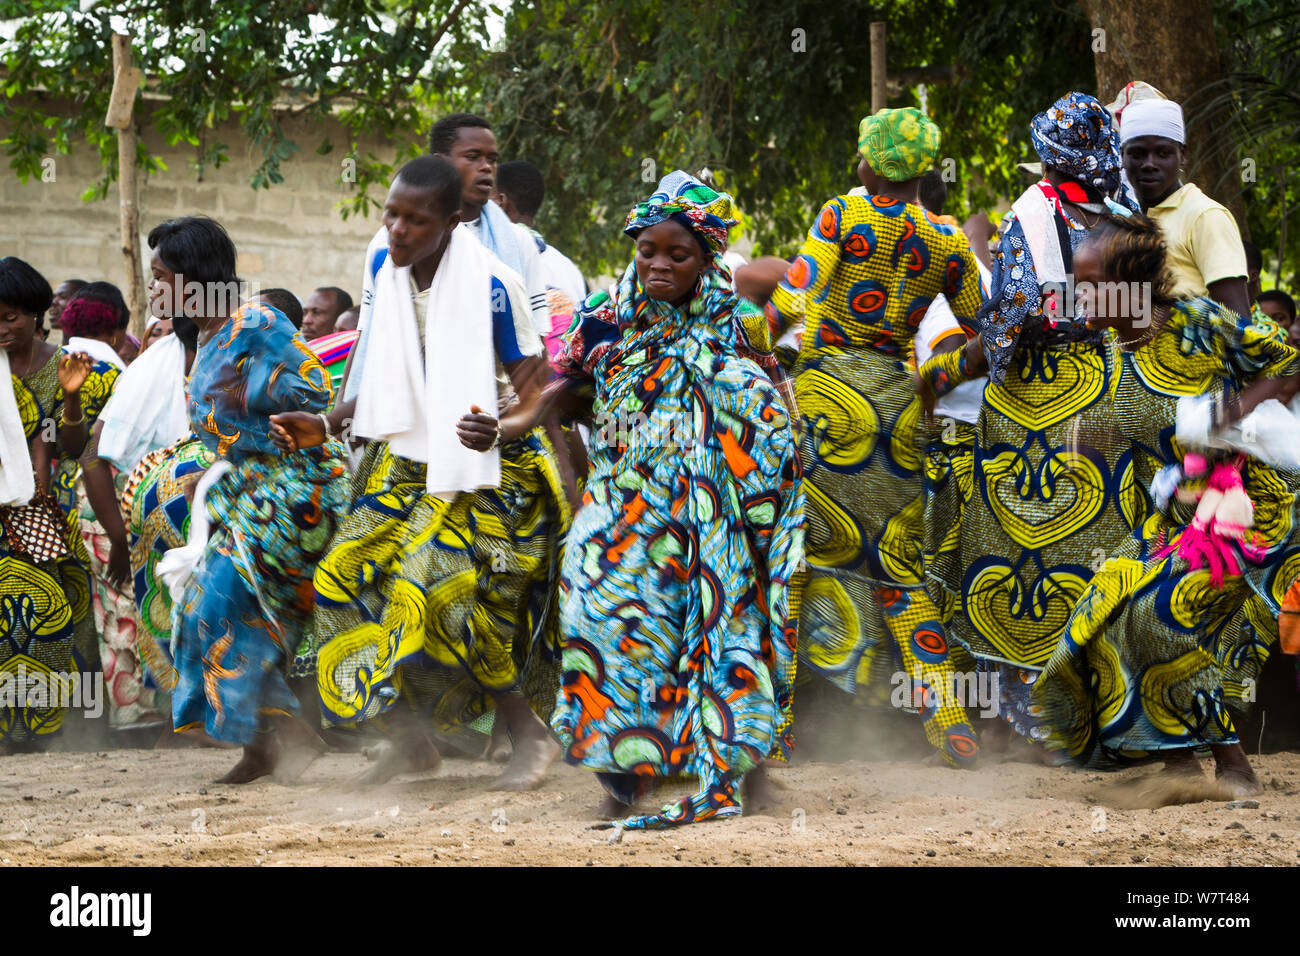 Men and women dancing during Zangbeto voodoo ceremony. Benin, Africa, February 2011. Stock Photo